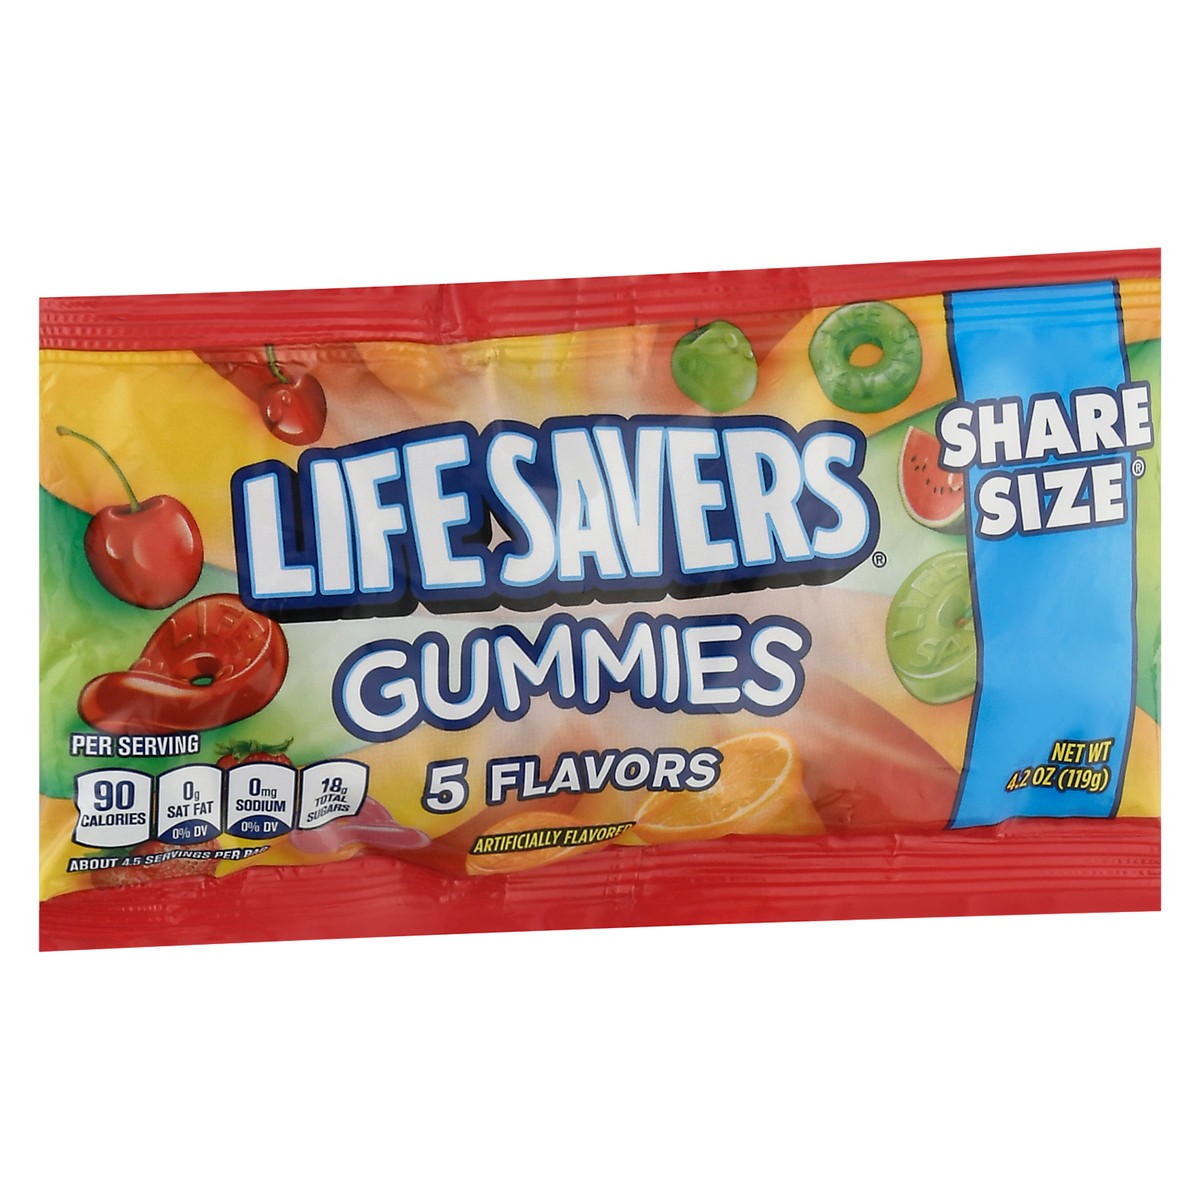 slide 4 of 9, Life Savers Share Size 5 Flavors Gummies 4.2 oz, 4.2 oz